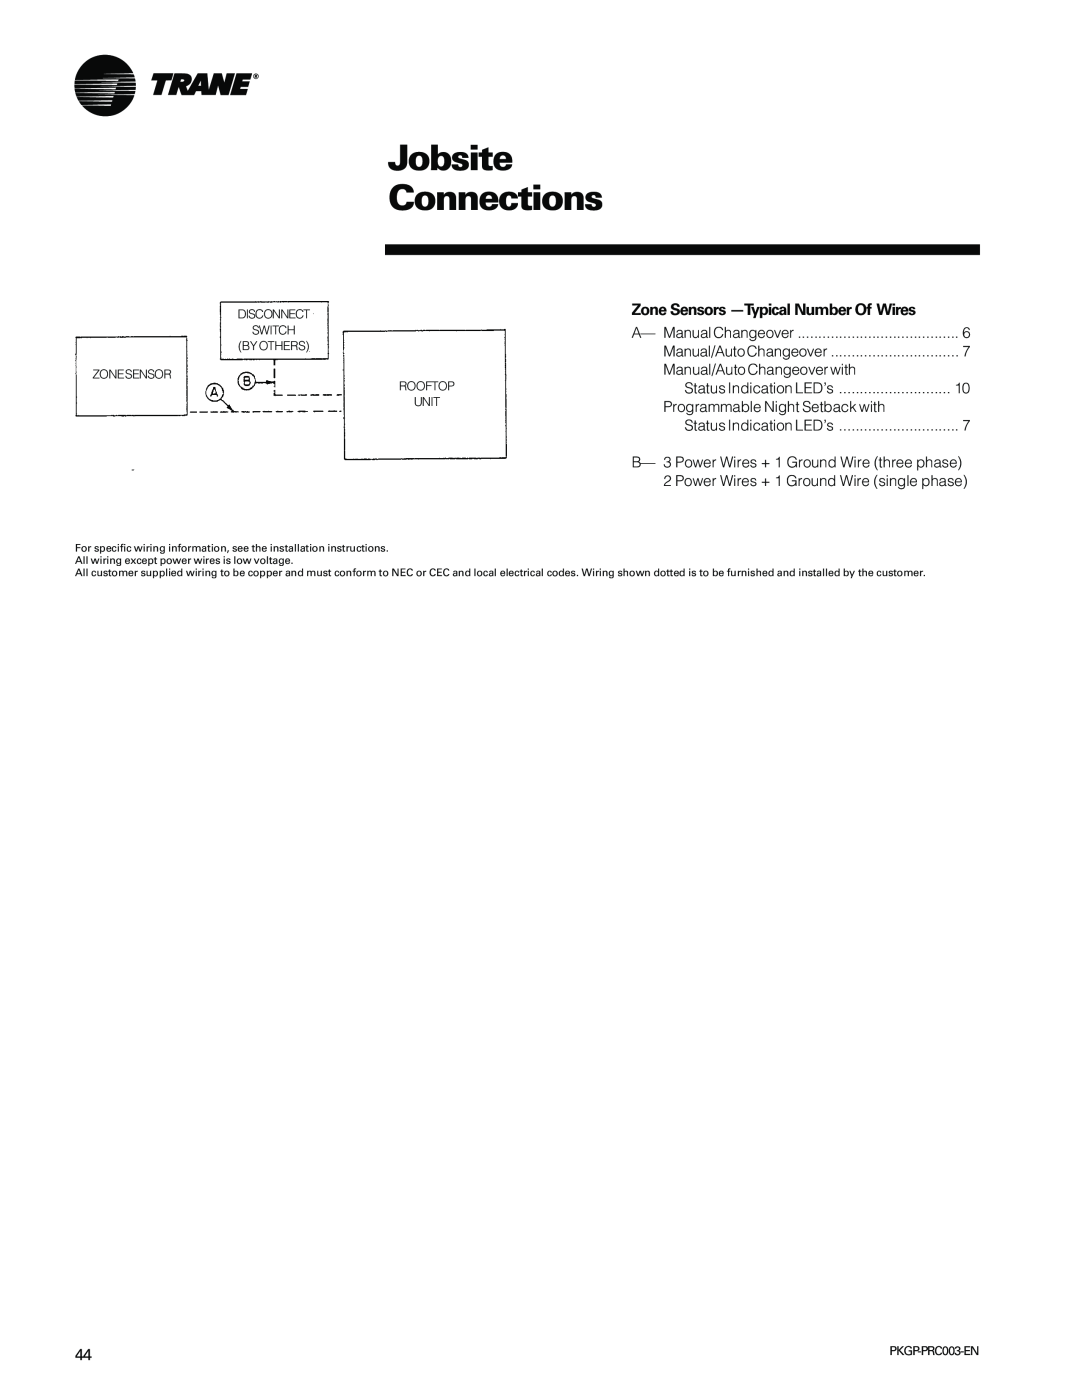 Trane PKGP-PRC003-EN manual Jobsite Connections, Zone Sensors -TypicalNumber Of Wires 